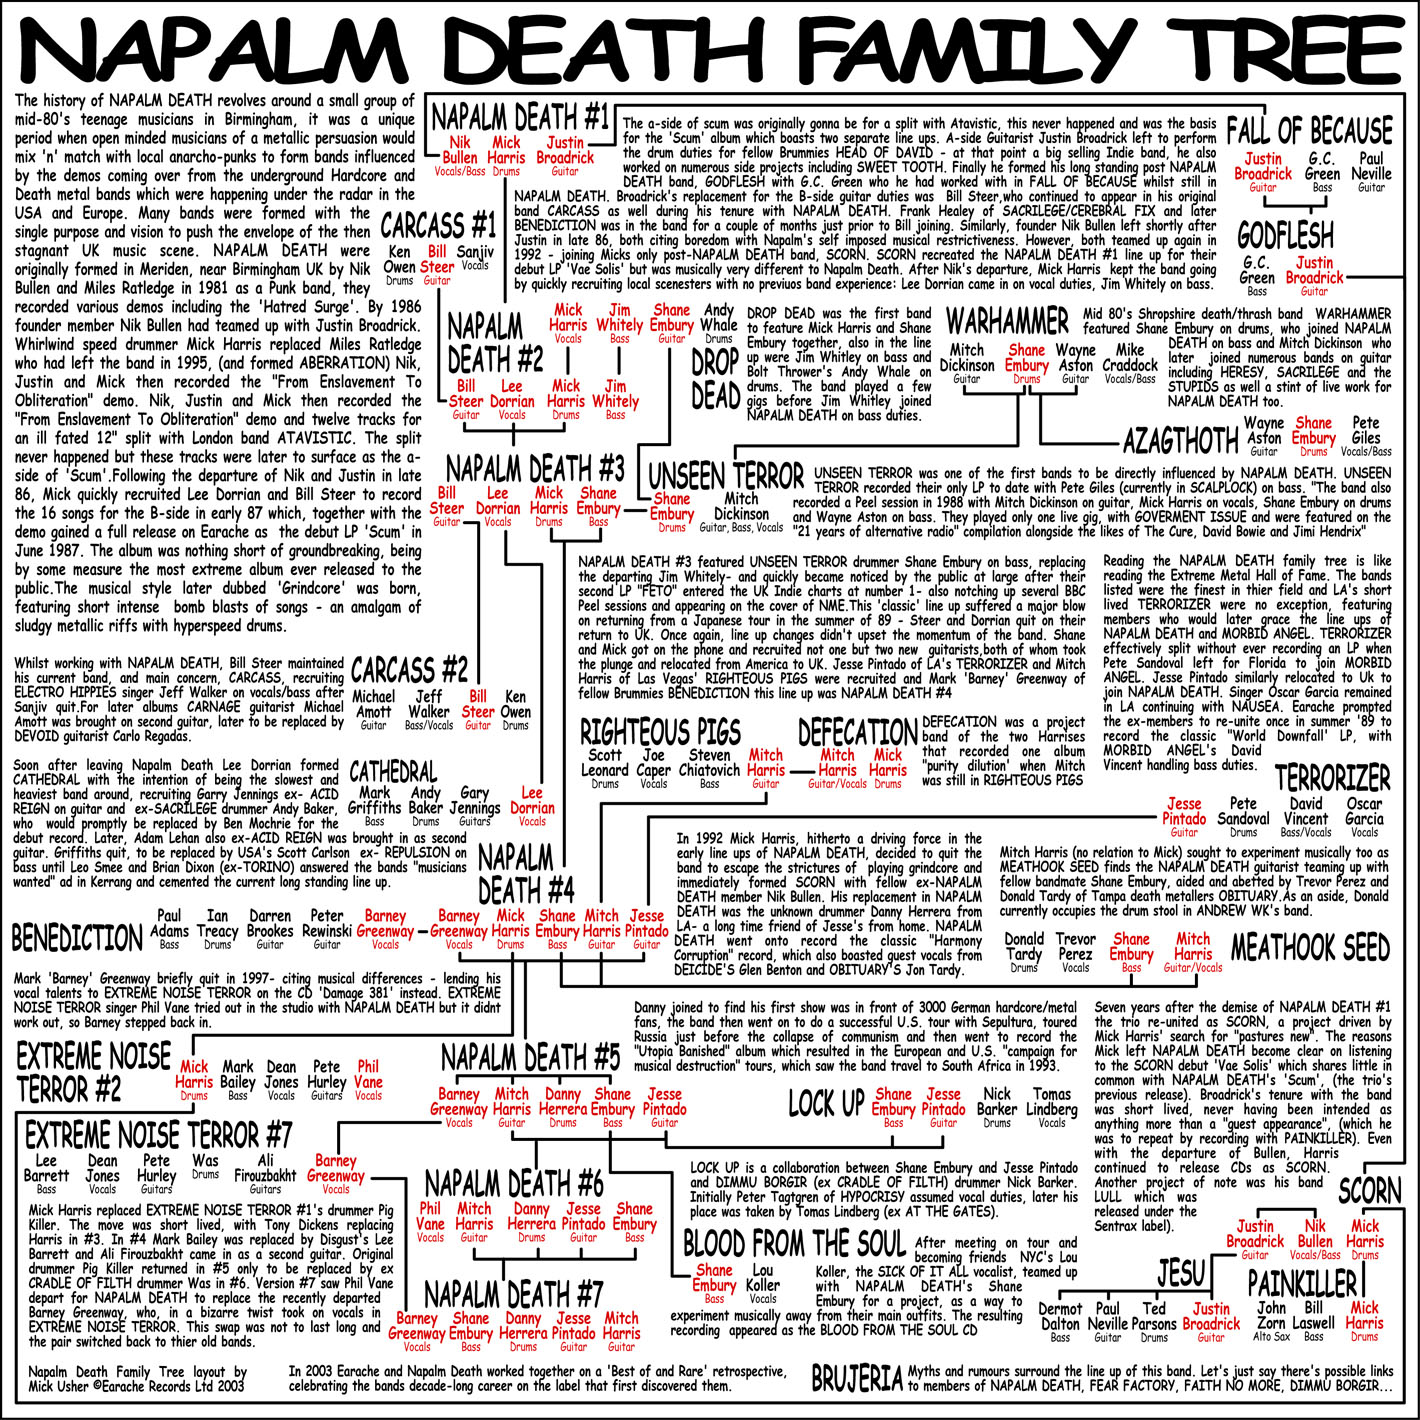 nd_family_tree.jpg